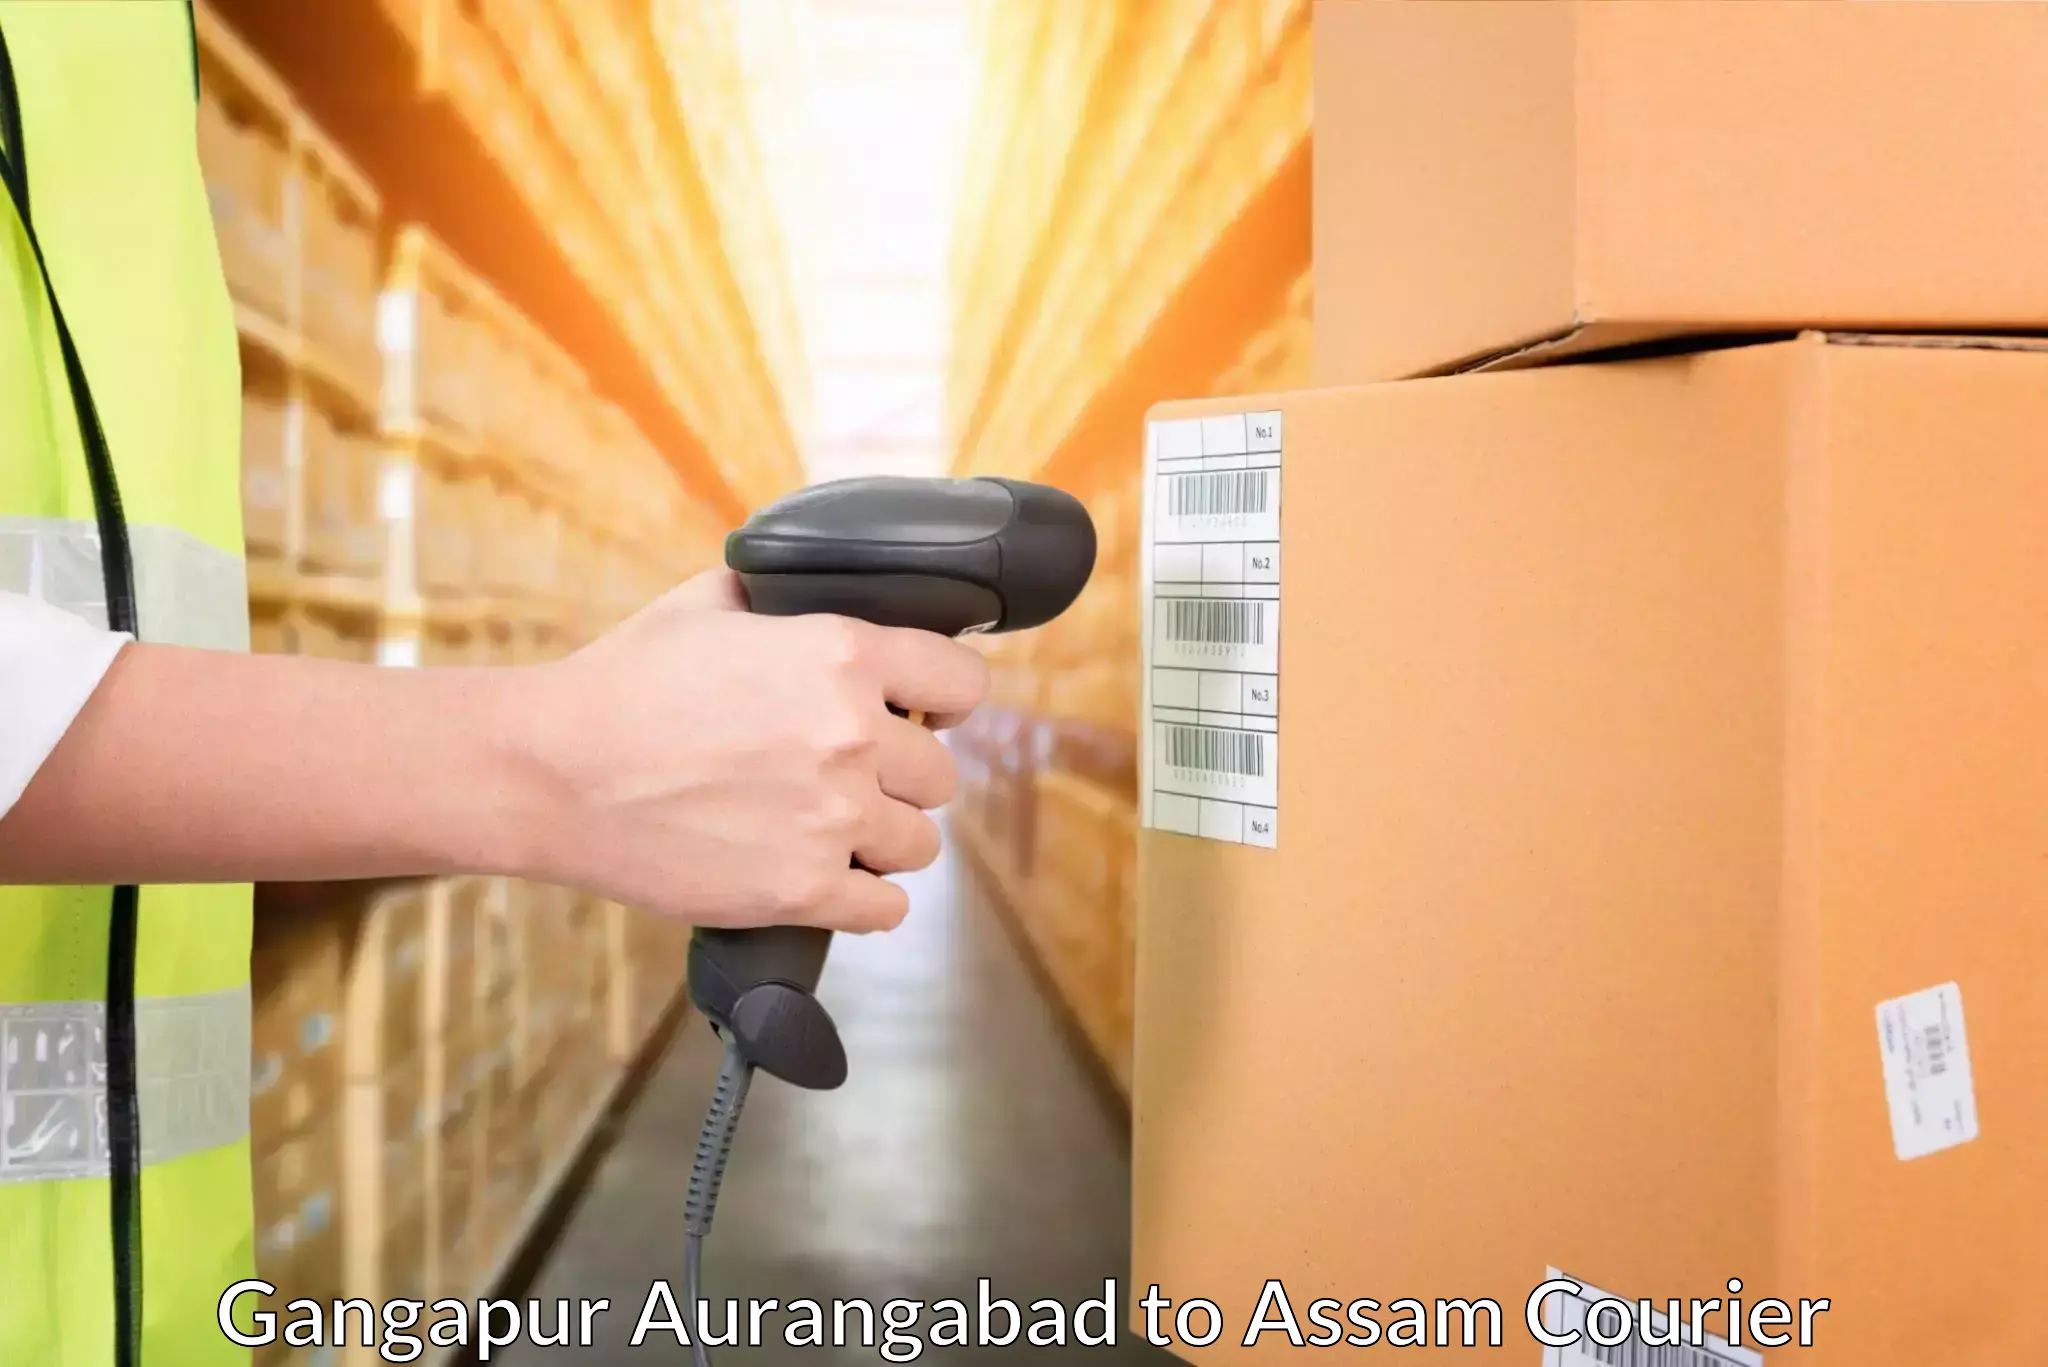 Same-day delivery solutions Gangapur Aurangabad to Guwahati University